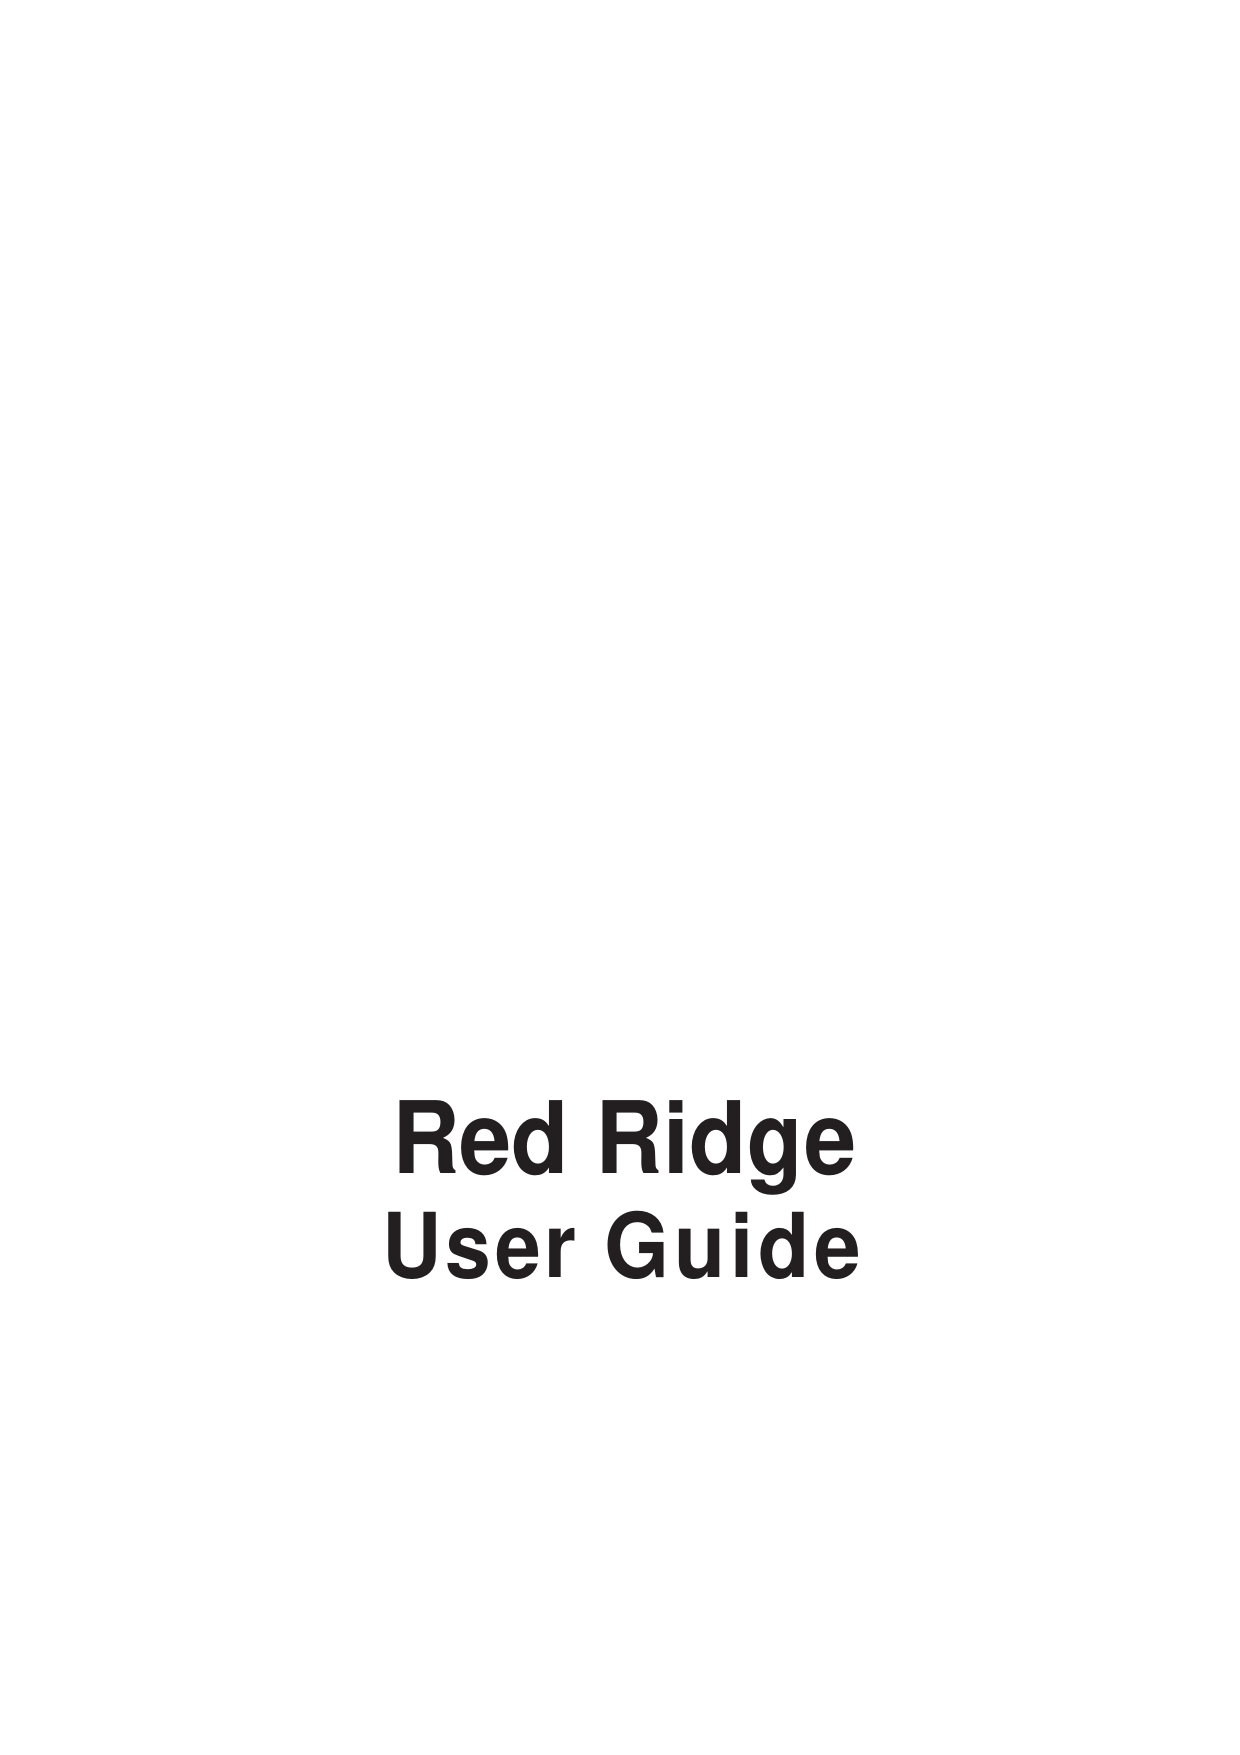                                             Red Ridge User Guide 